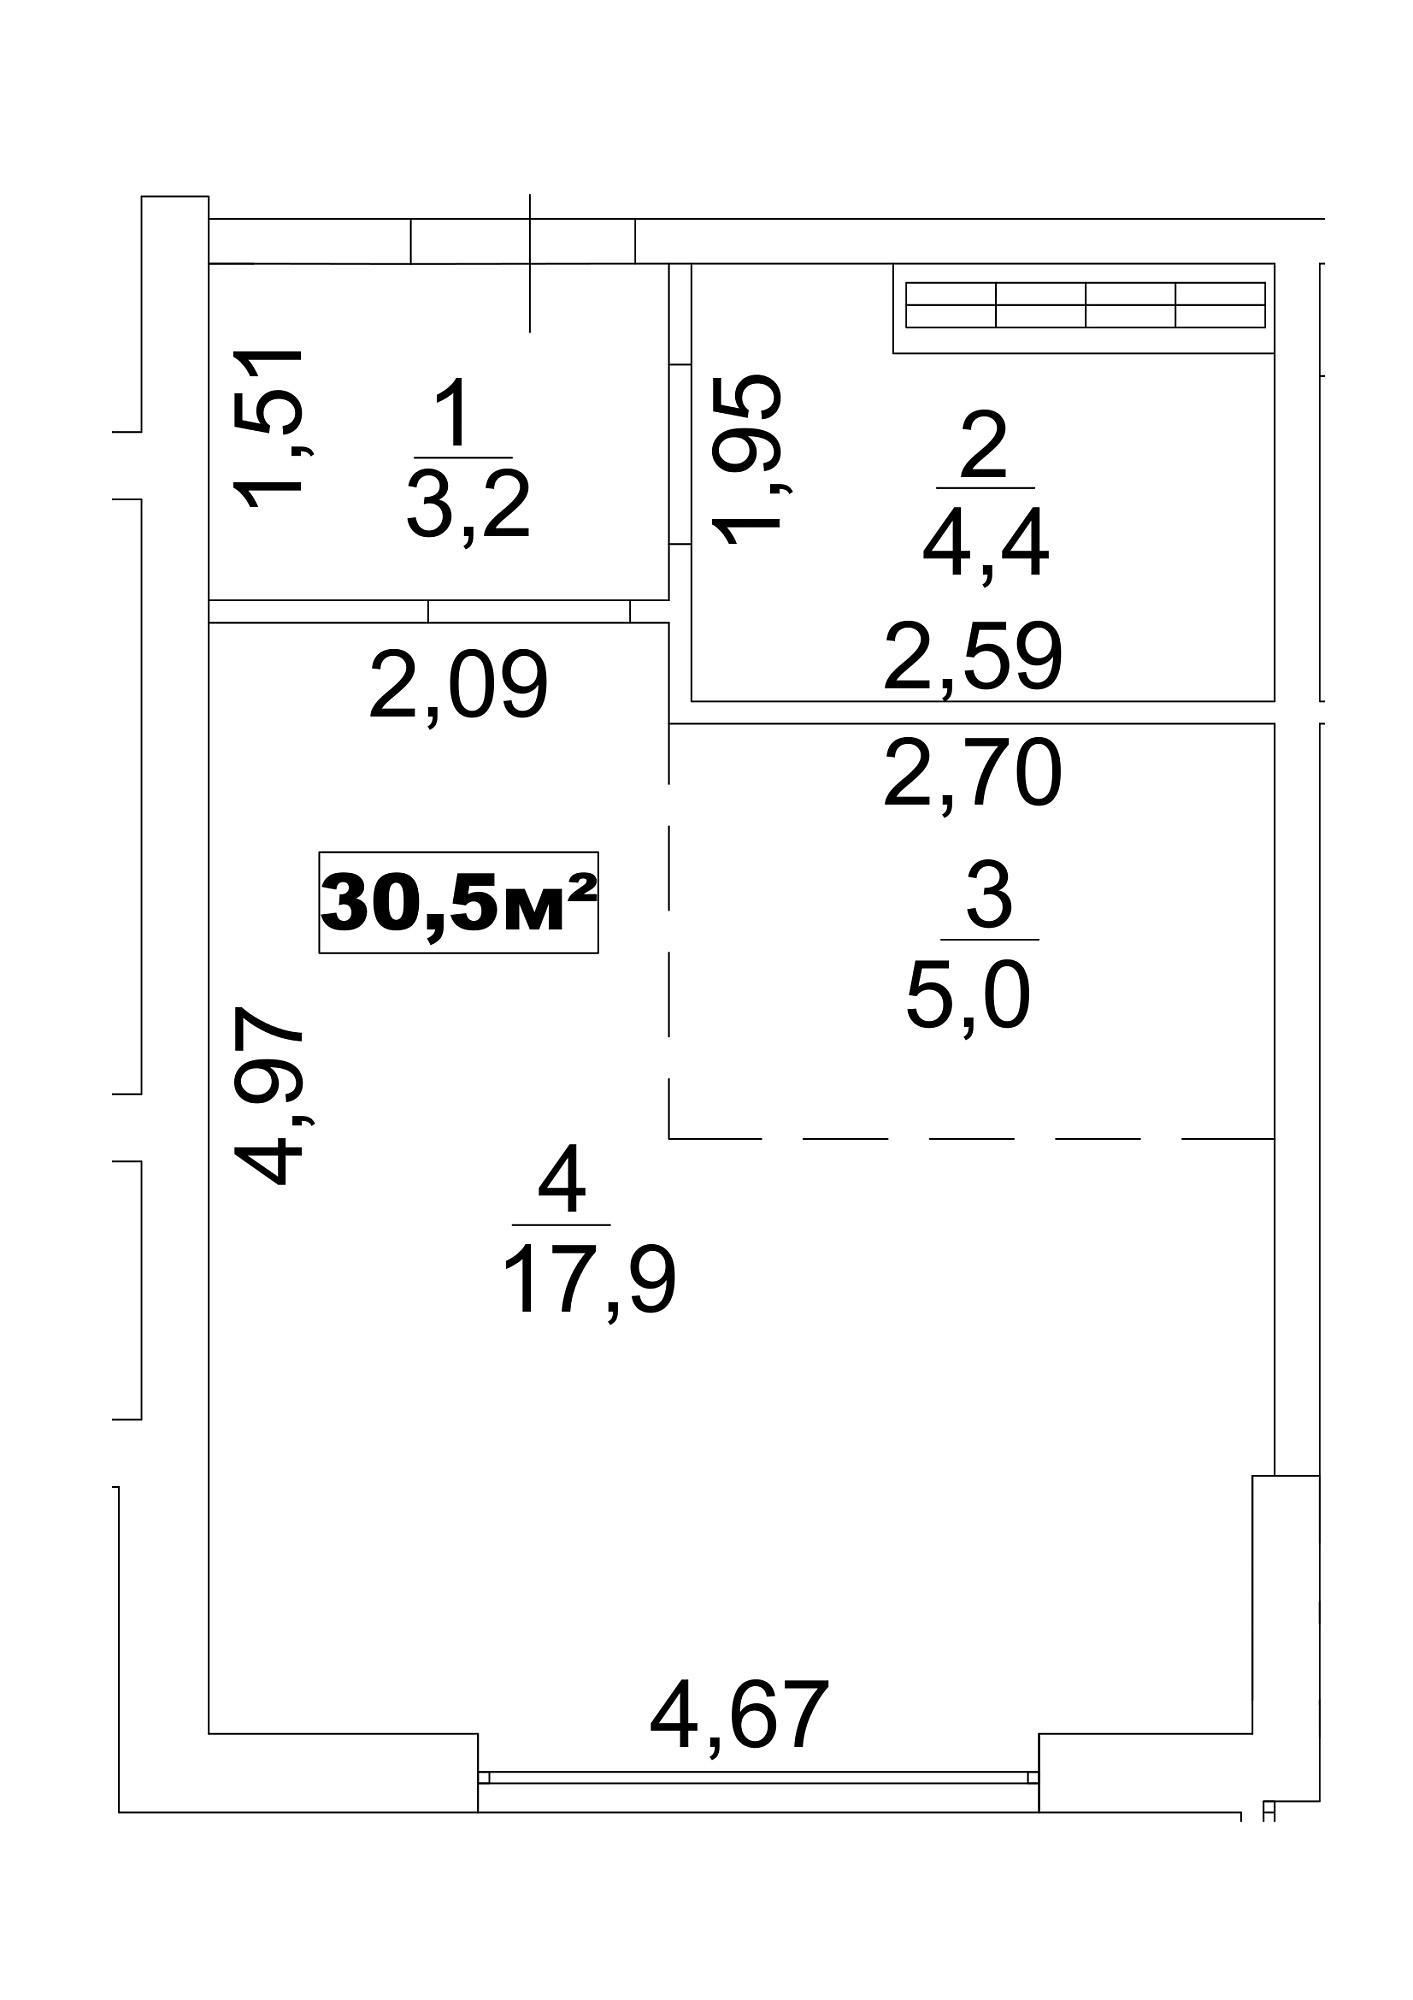 Planning Smart flats area 30.5m2, AB-13-09/00078.